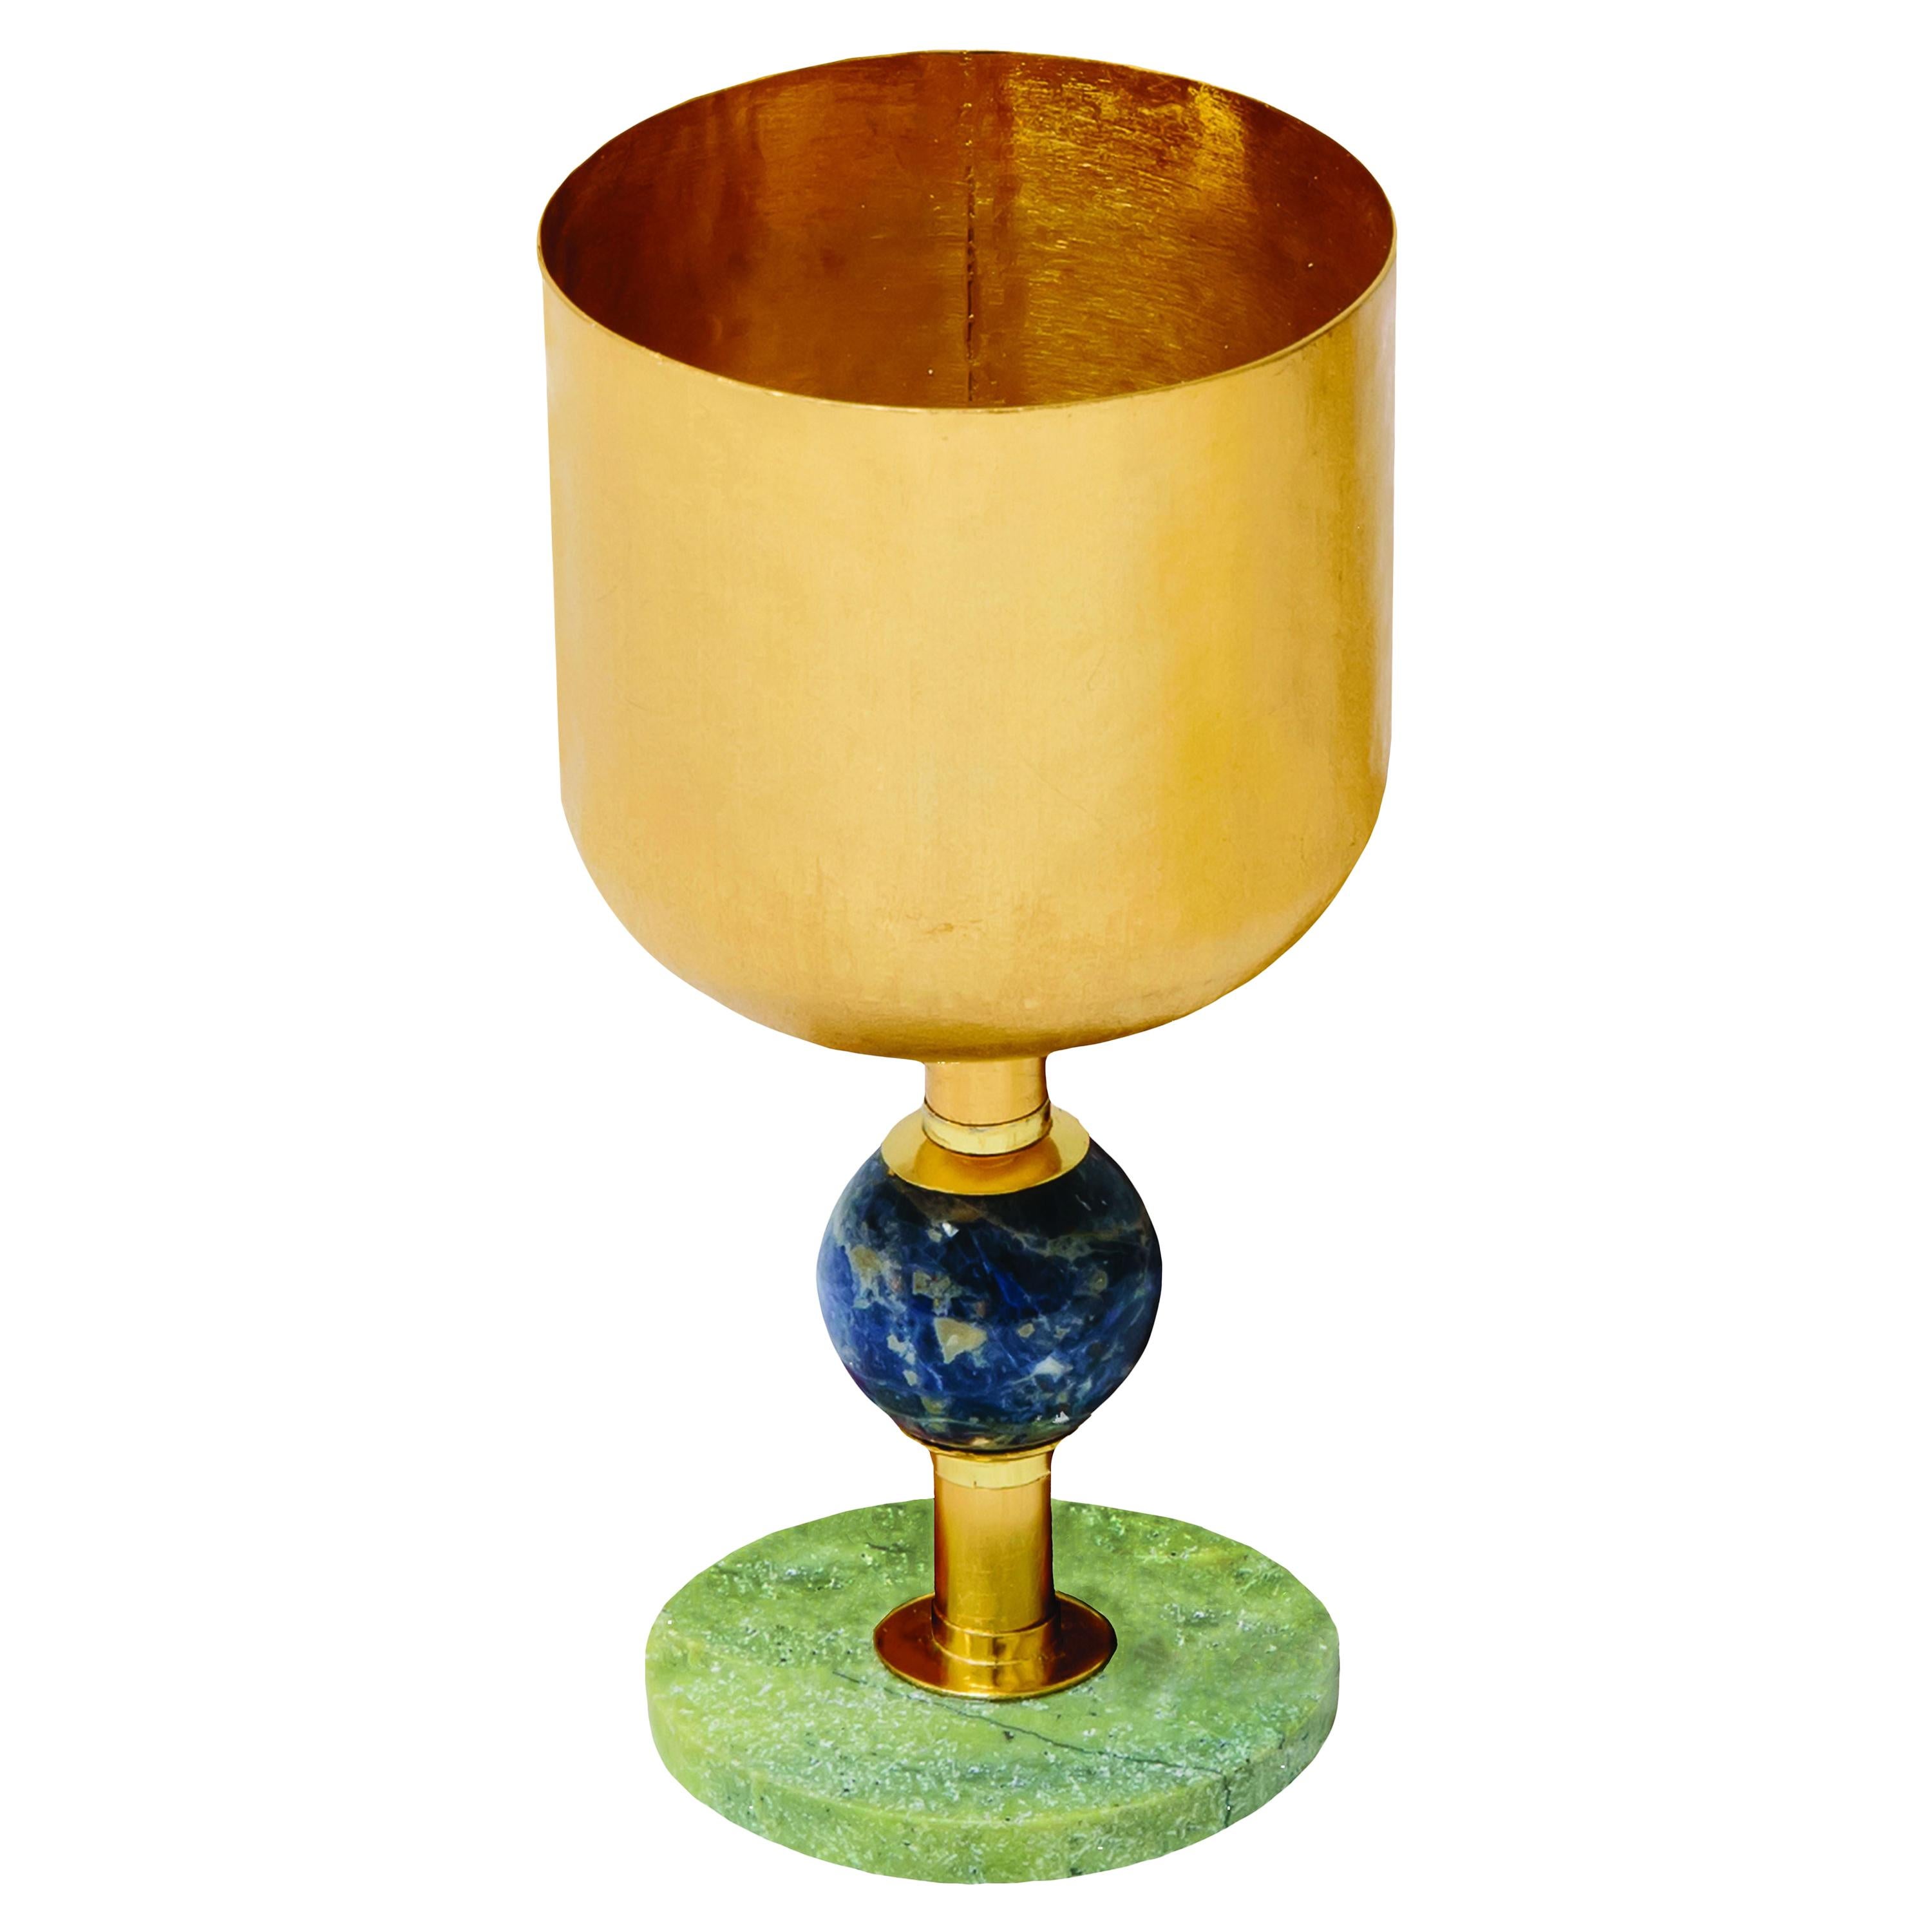 Contemporary Gold Plated Cup Serpentine - Lapis Lazuli Stone by Natalia Criado